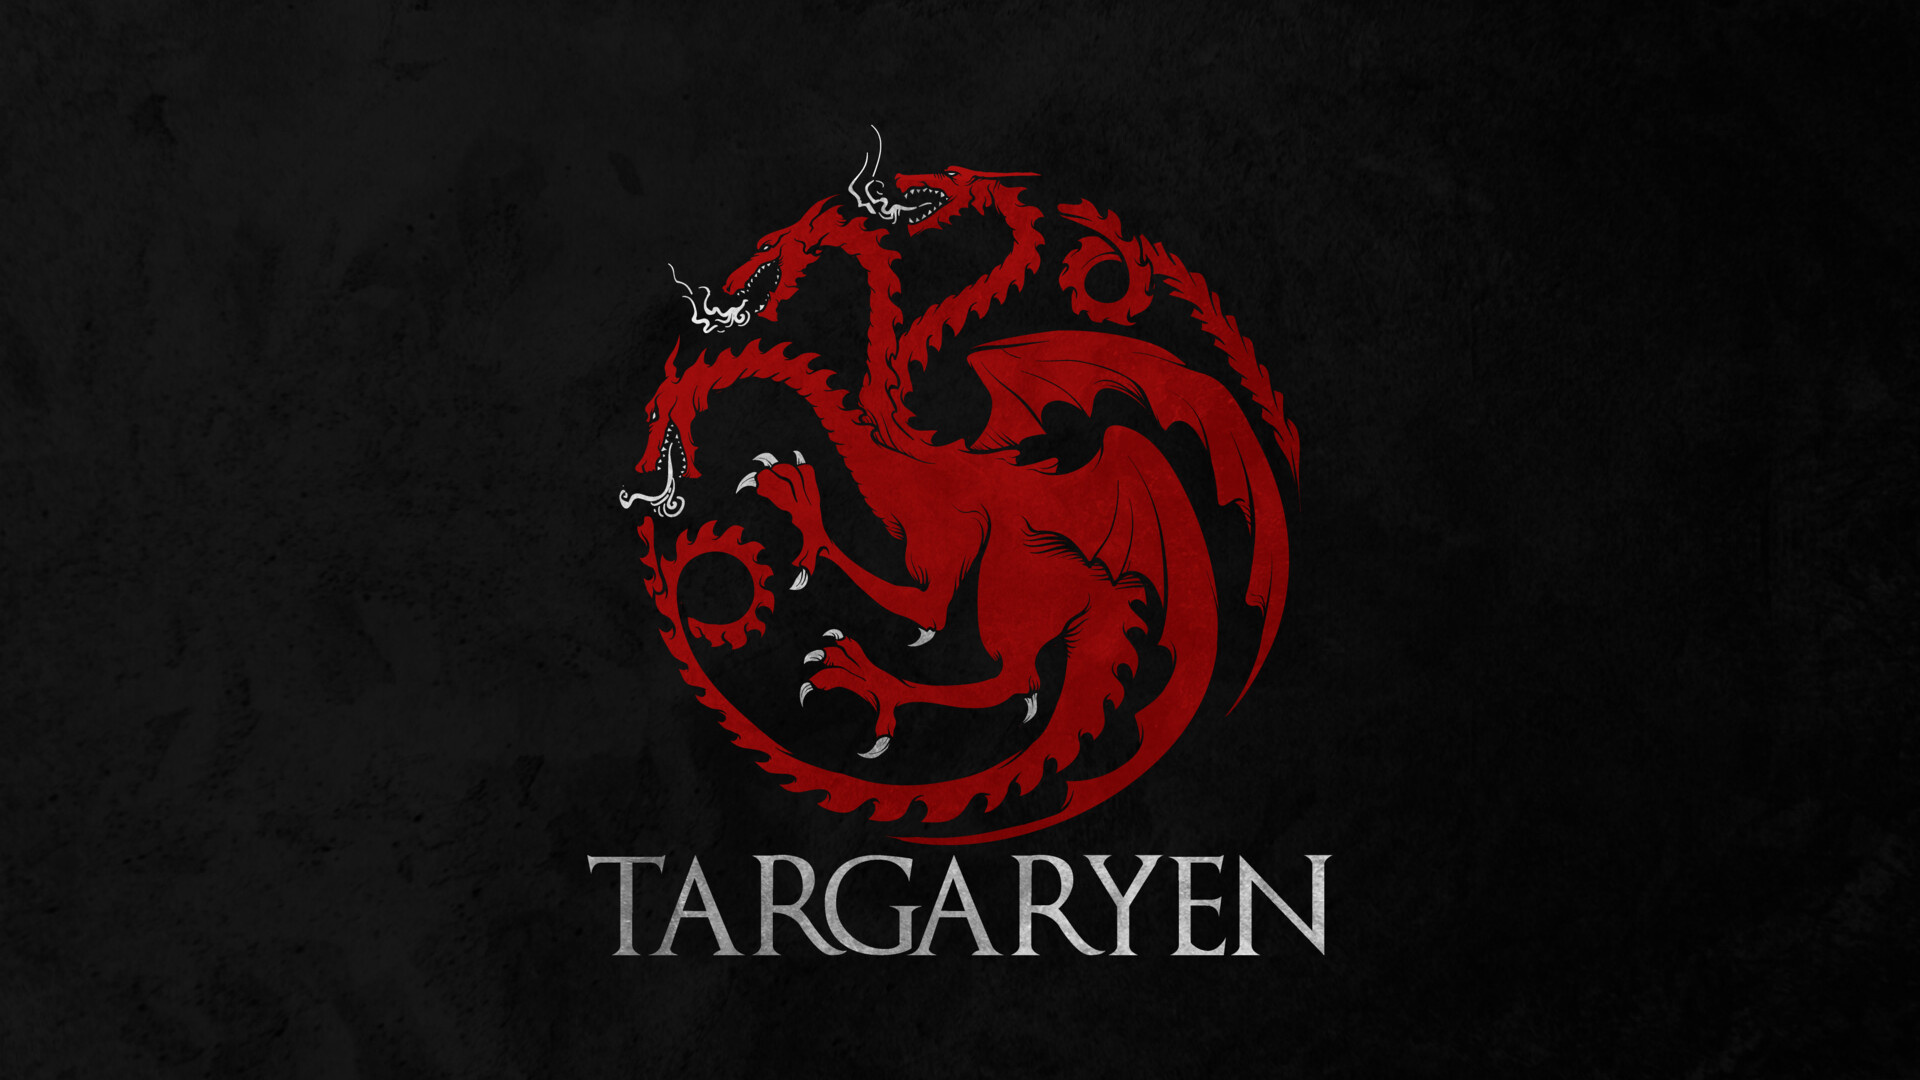 Targaryen dynasty, Game of Thrones prequel, House of the Dragon, Talkies network, 1920x1080 Full HD Desktop